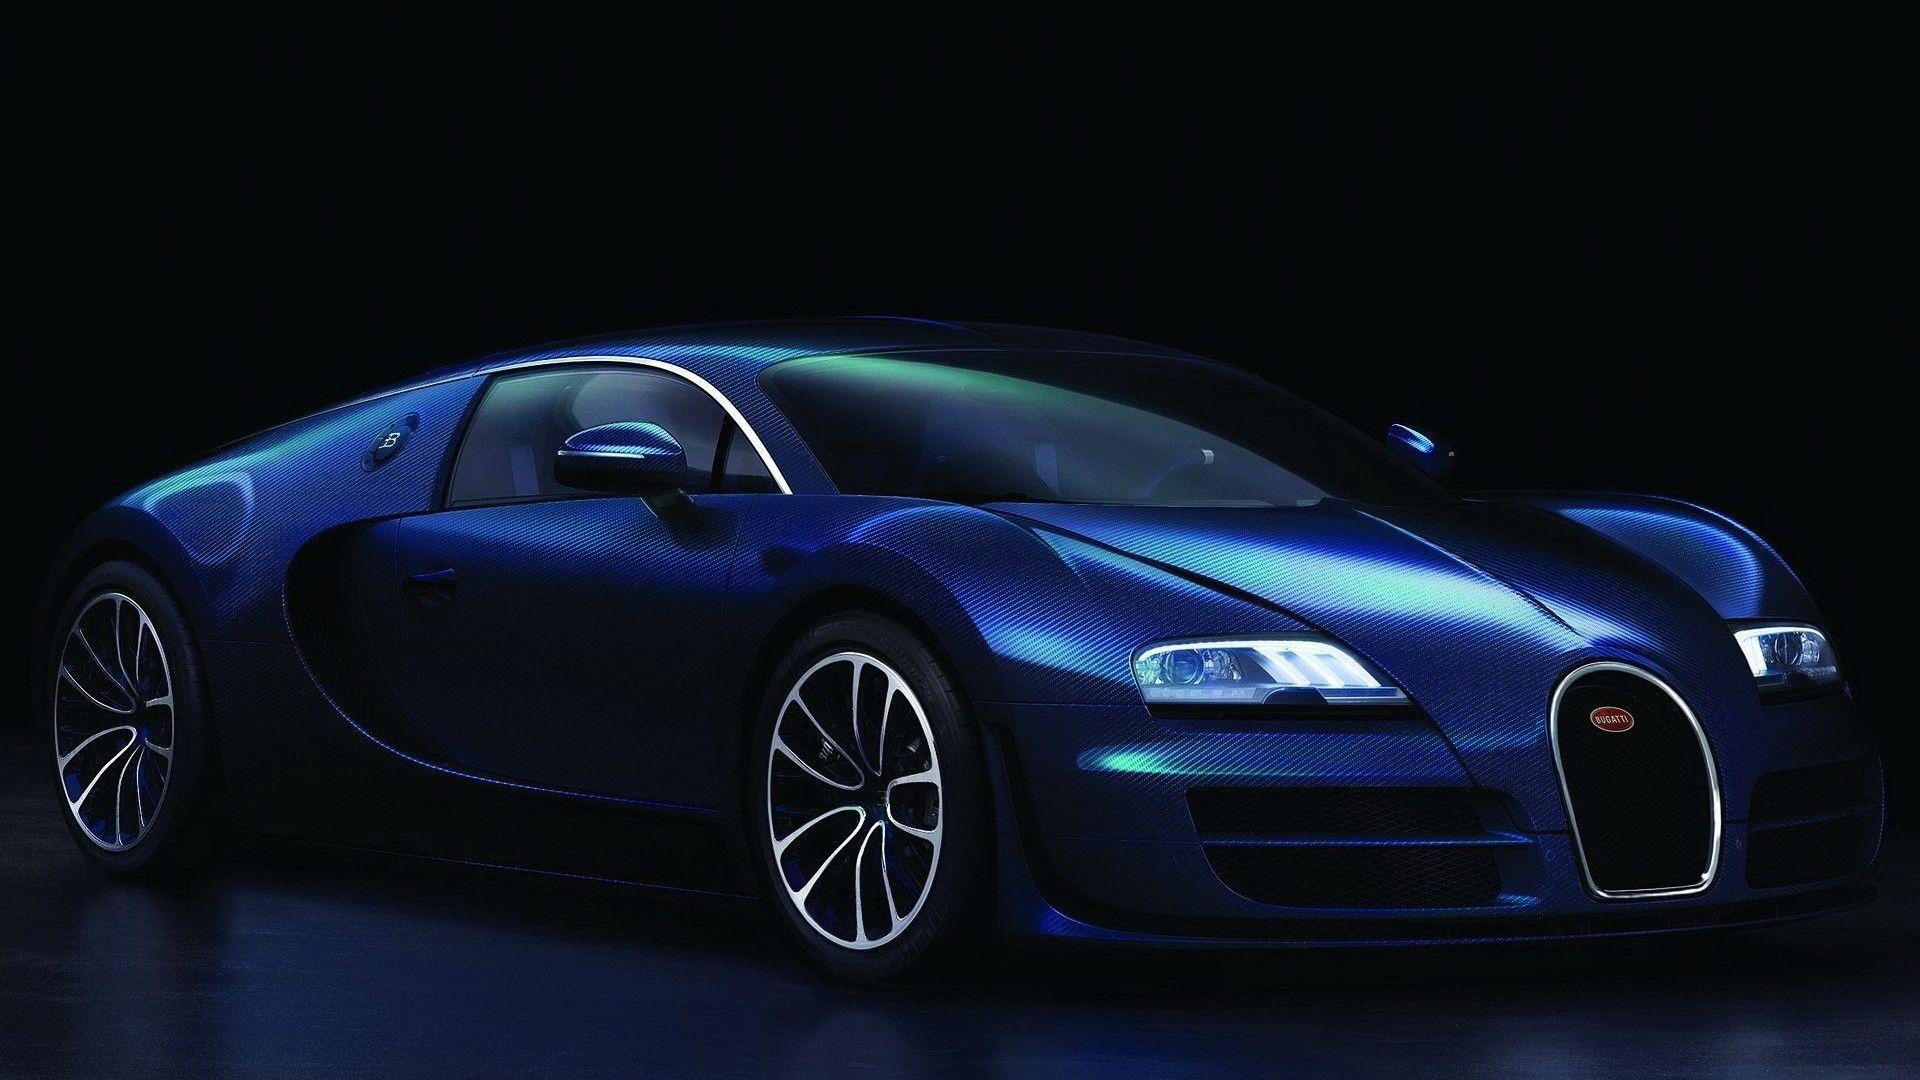 Bugatti Veyron Picture, Image